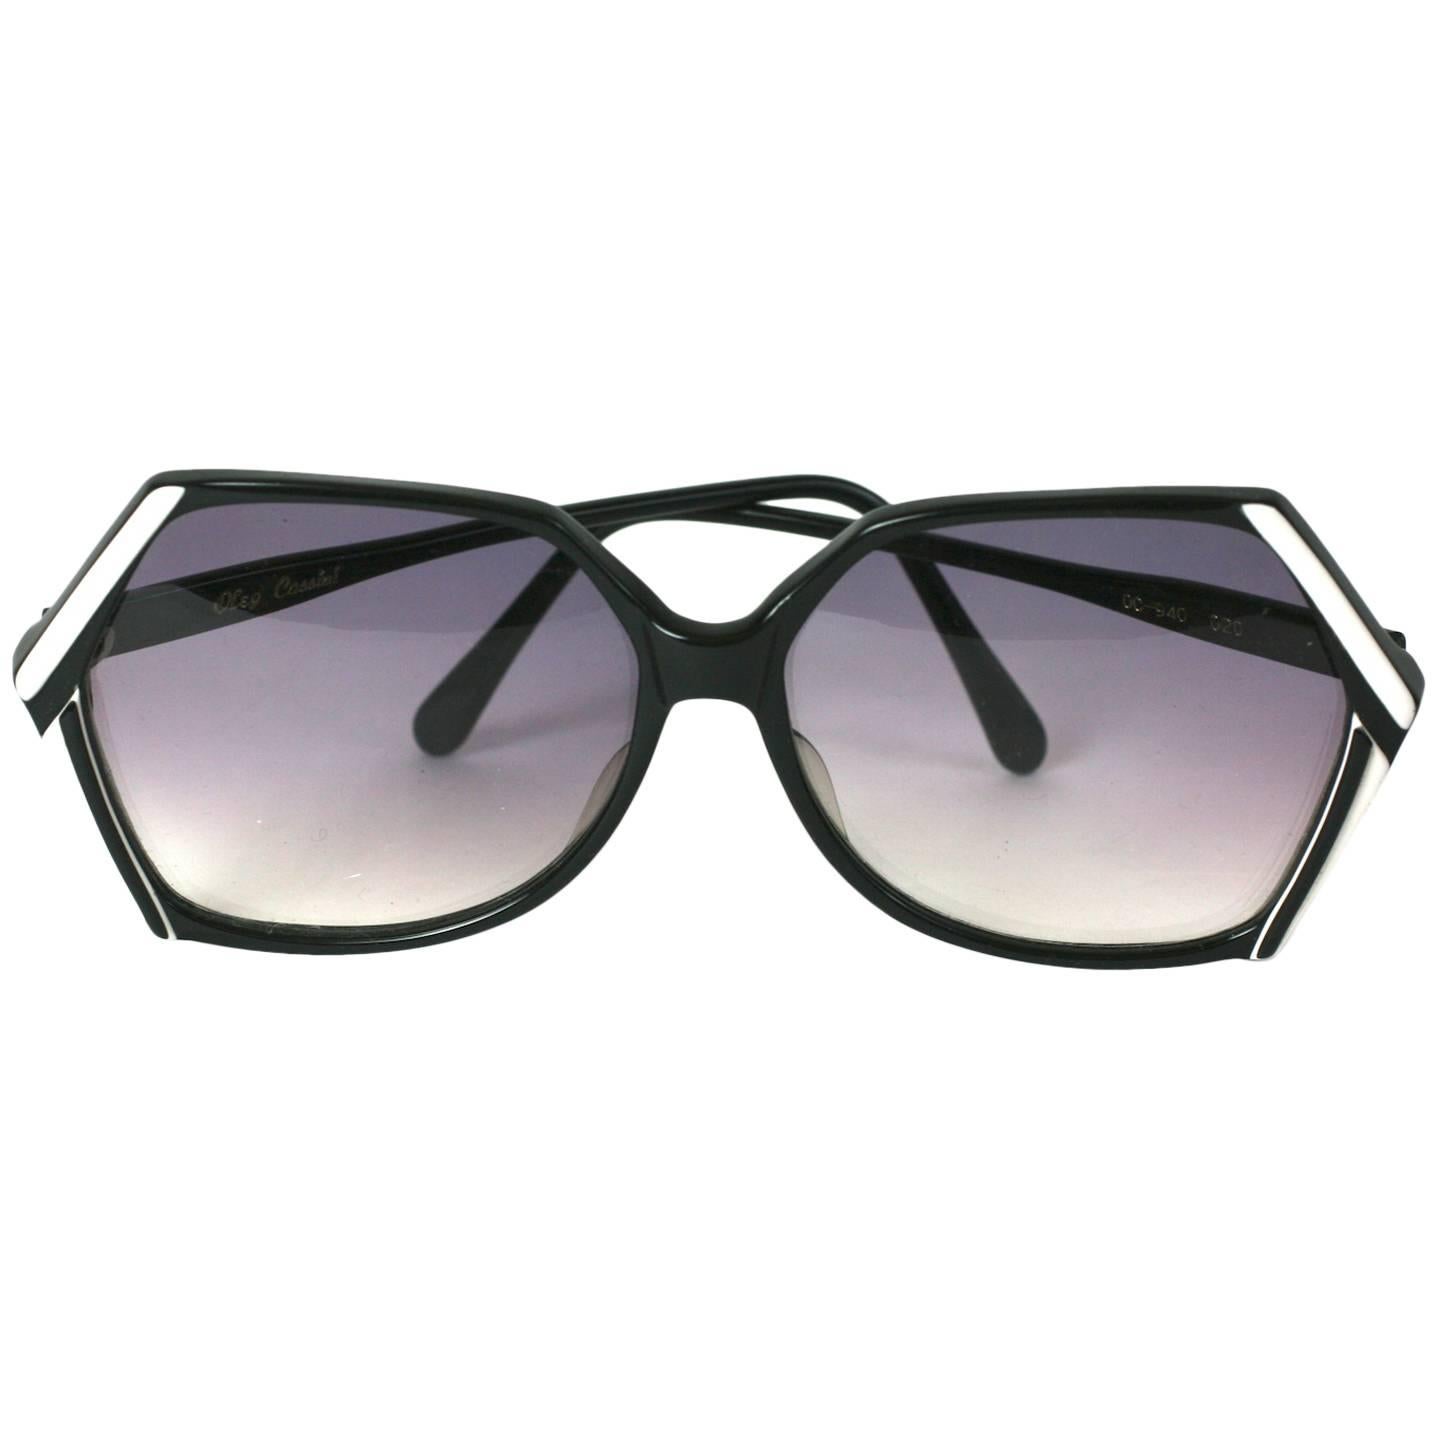 Oleg Cassini Graphic Black White Sunglasses For Sale